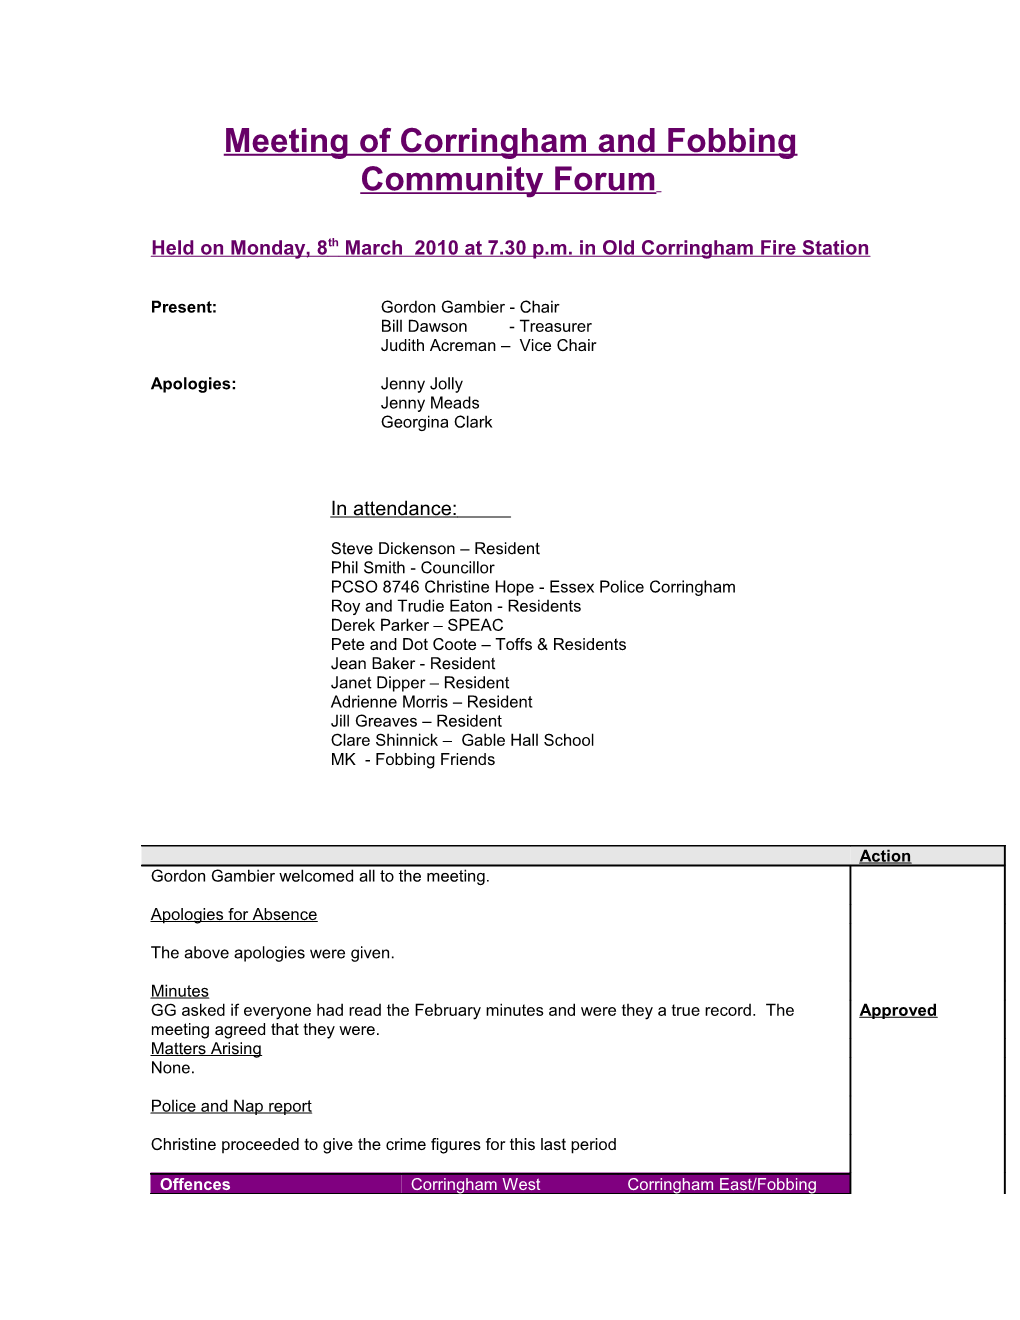 Meeting of Corringham and Fobbing Community Forum